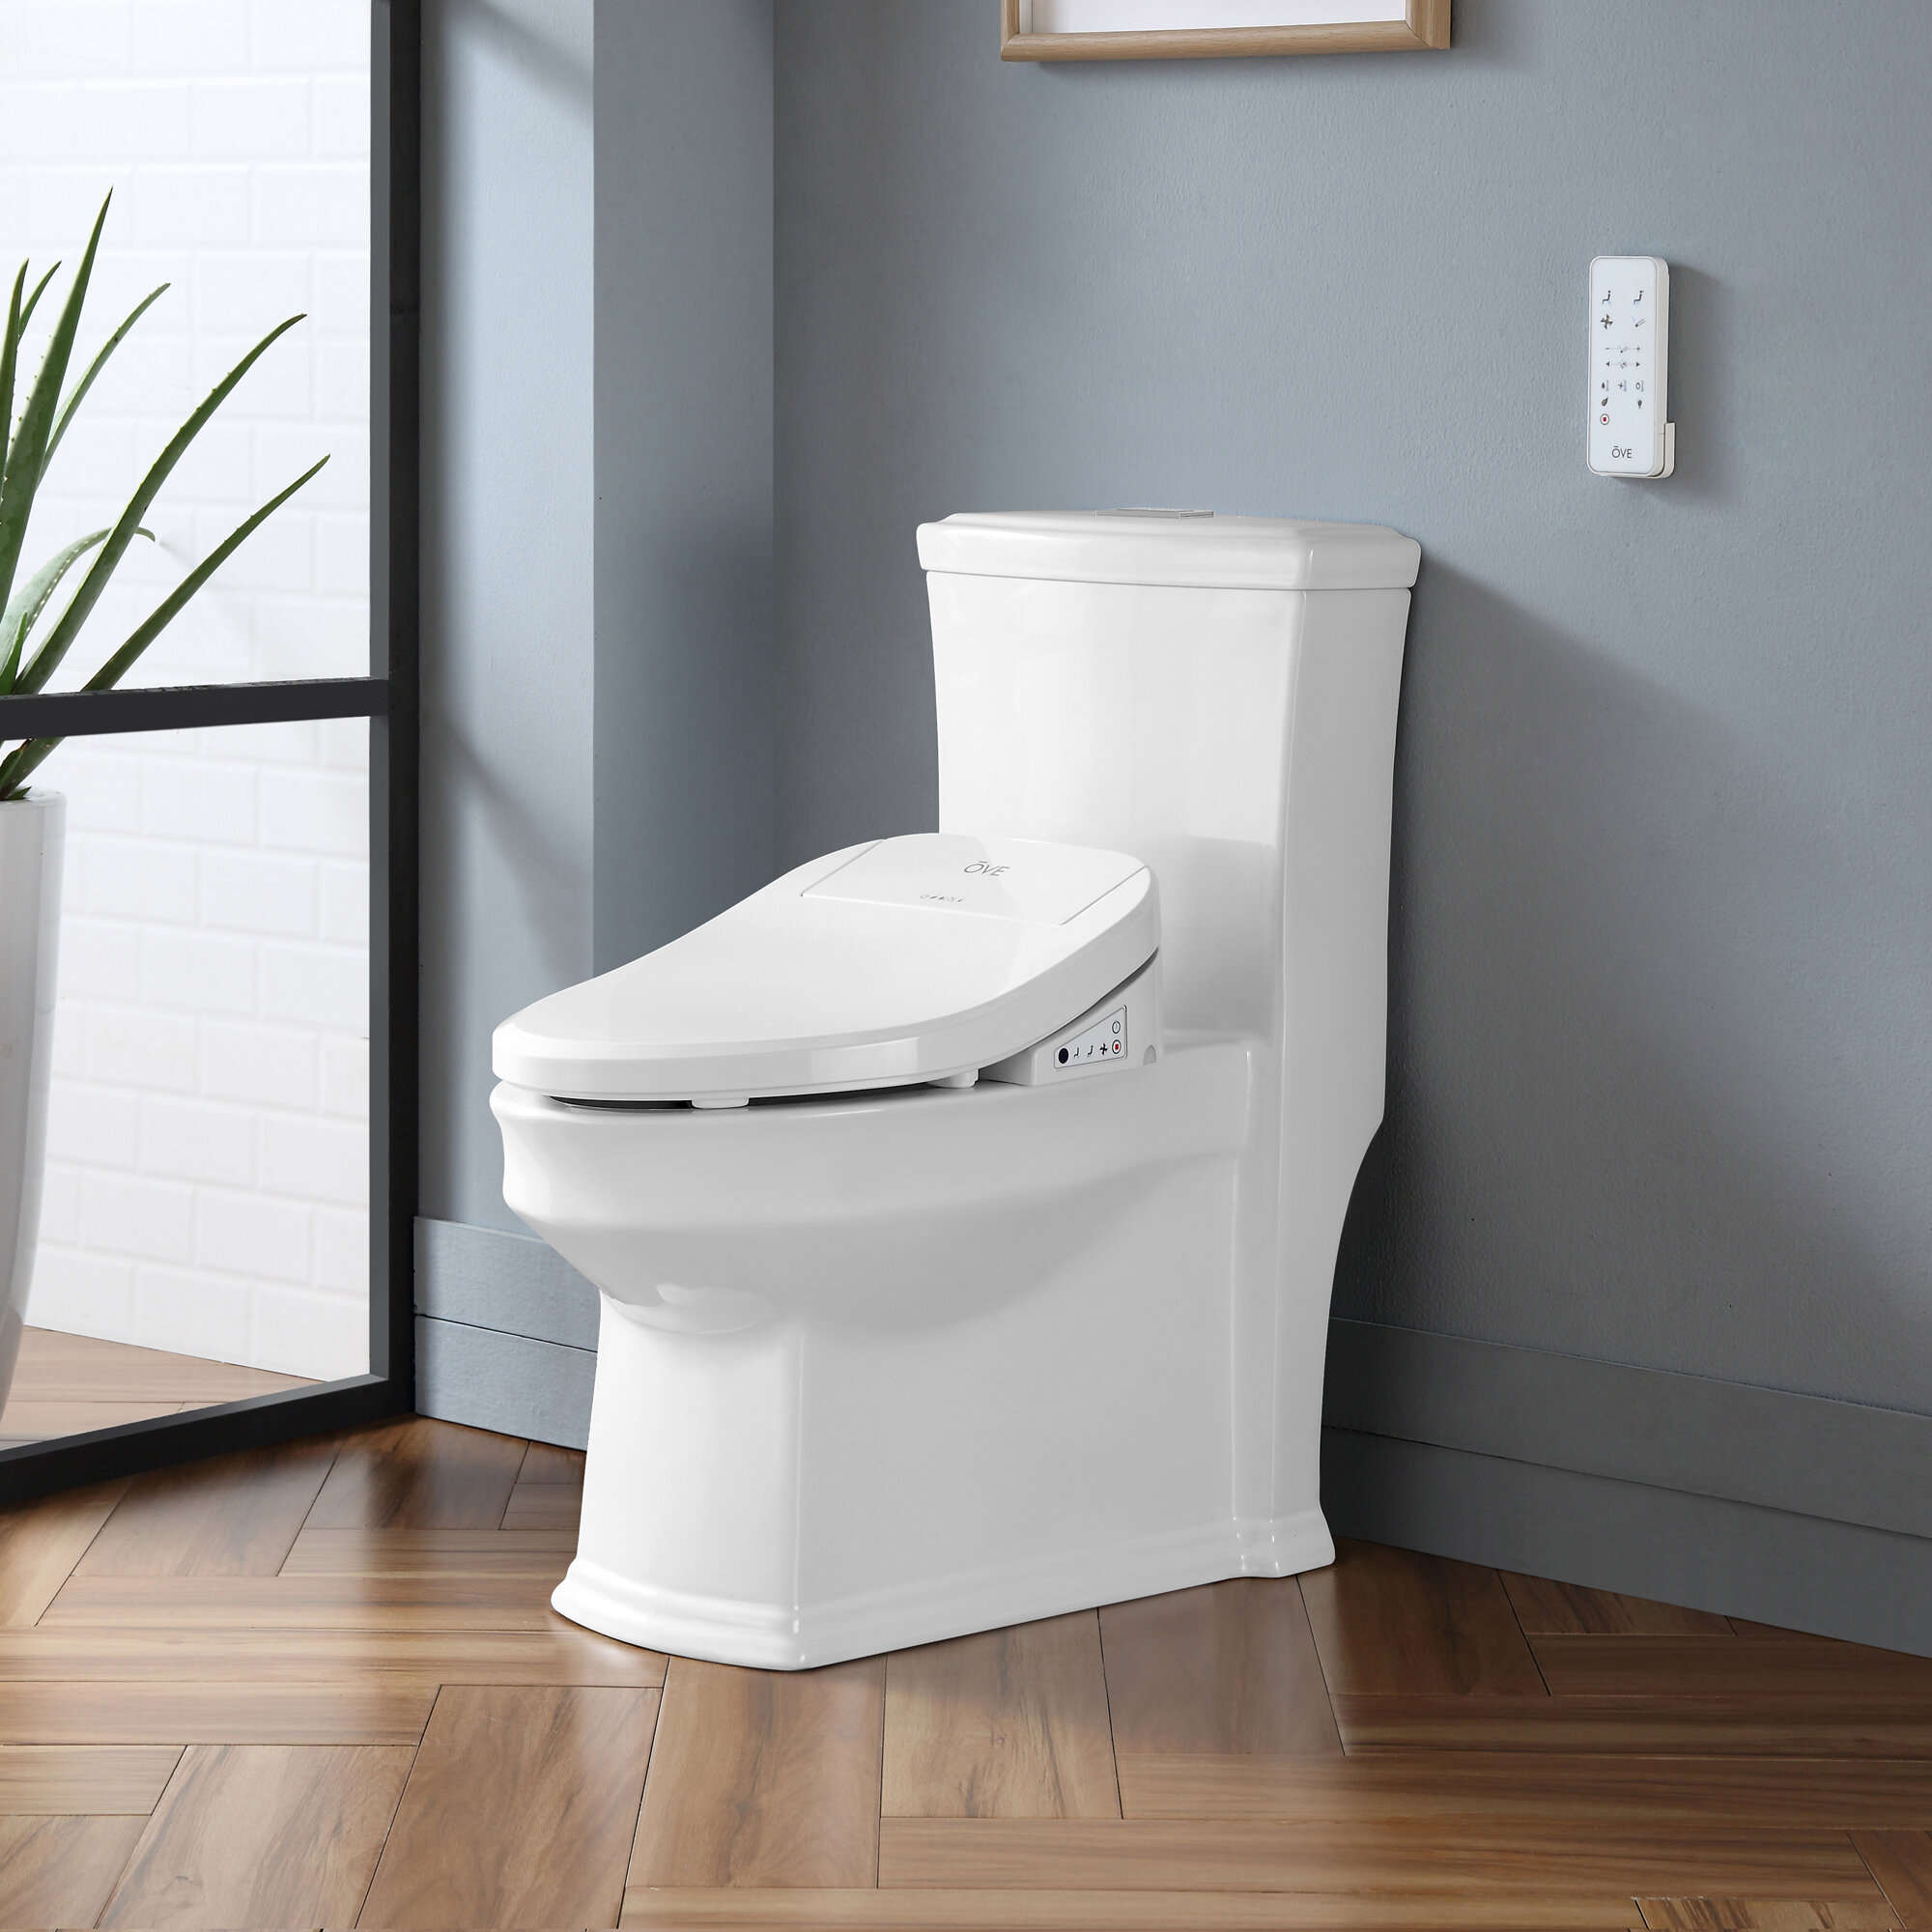 Toilette intelligente avec siège bidet Skye par Ove Decors